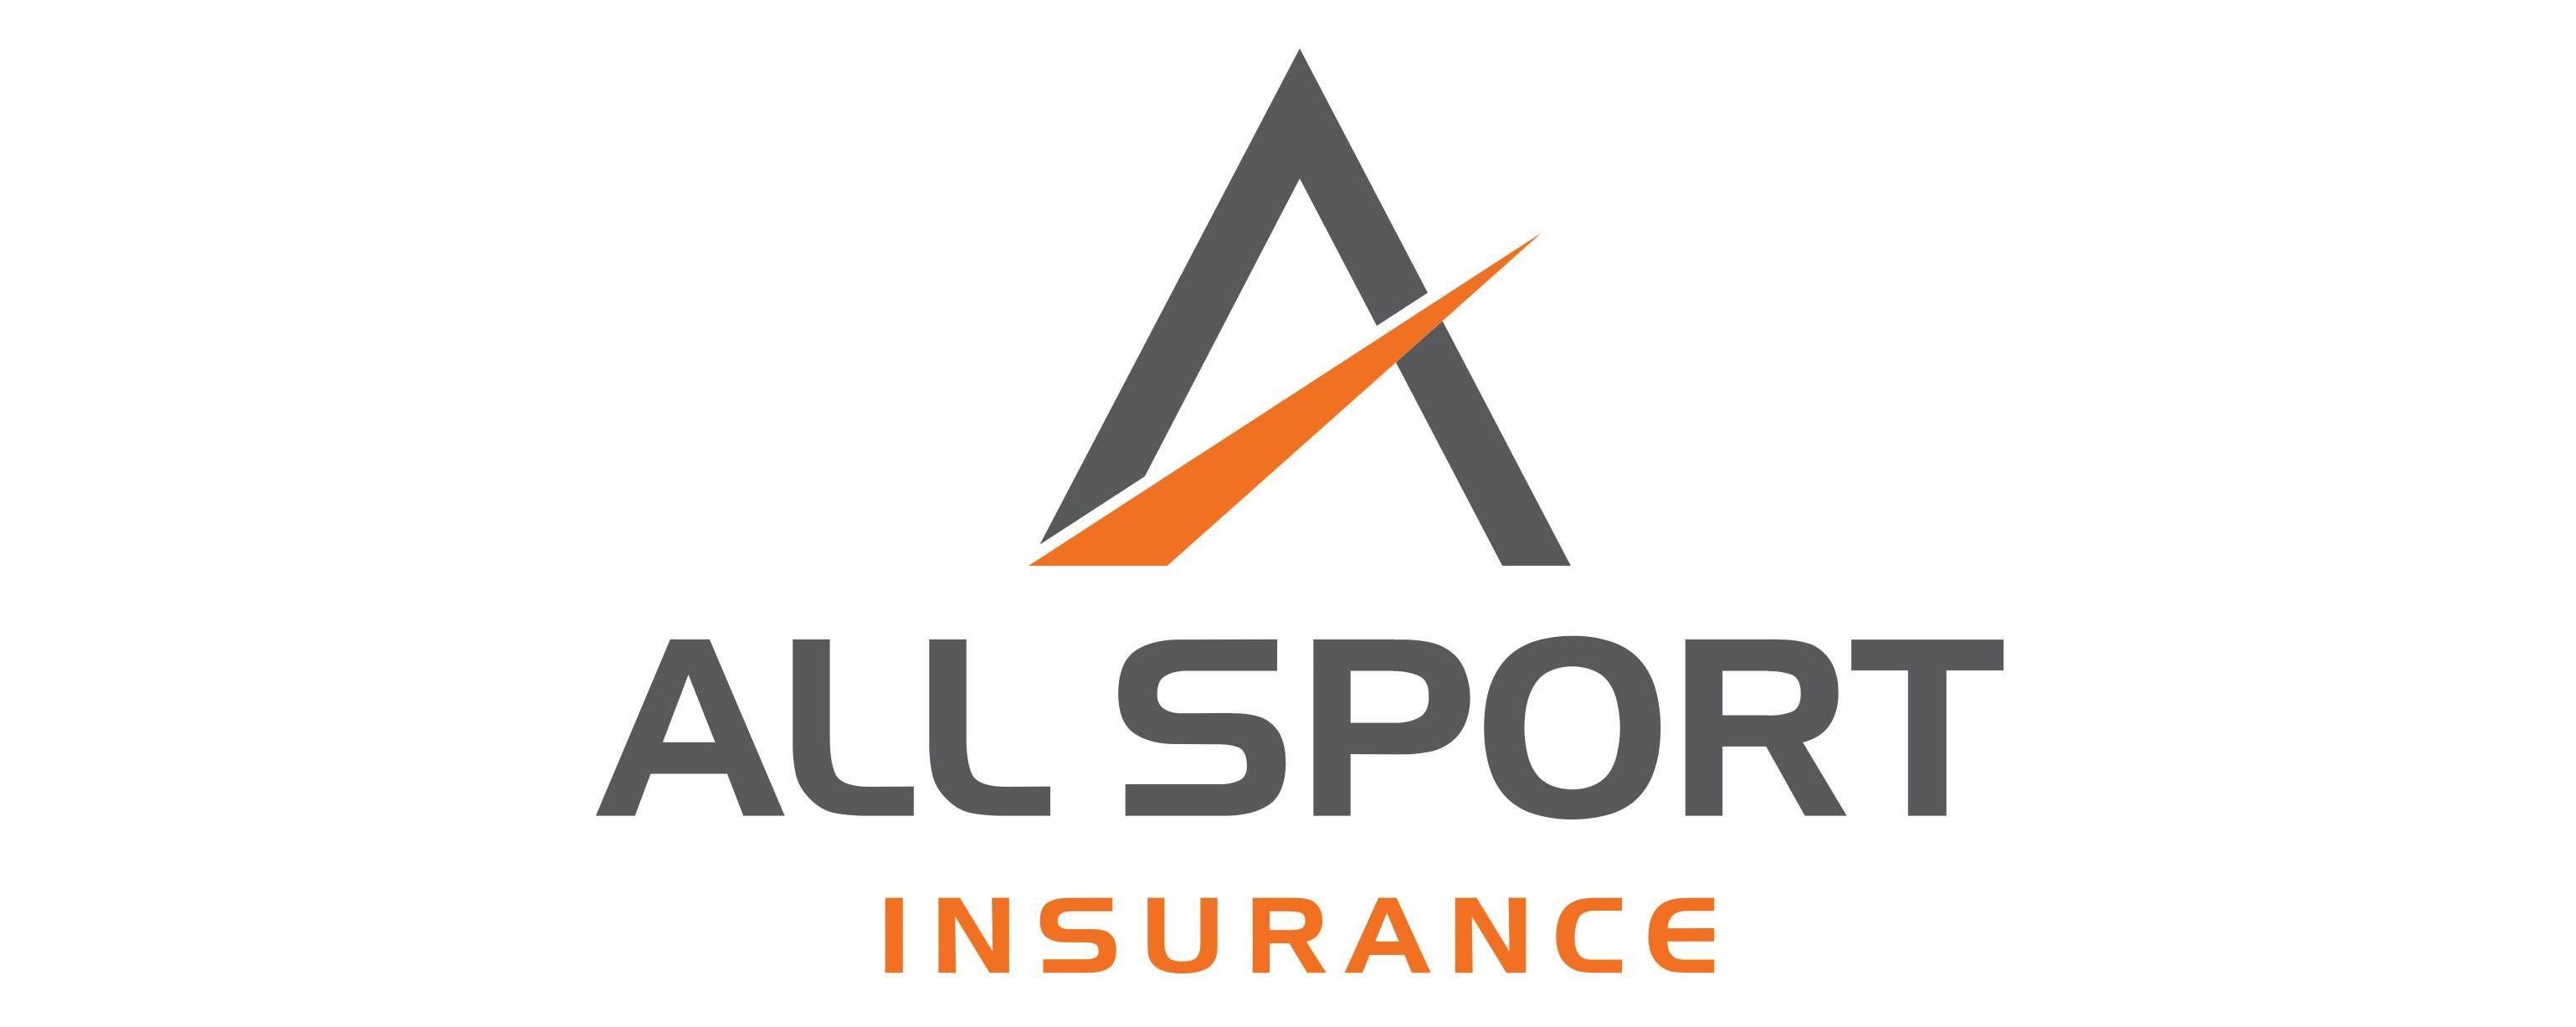 Triangle Insurance Logo - Homepage | All Sport Insurance - All Sport Insurance